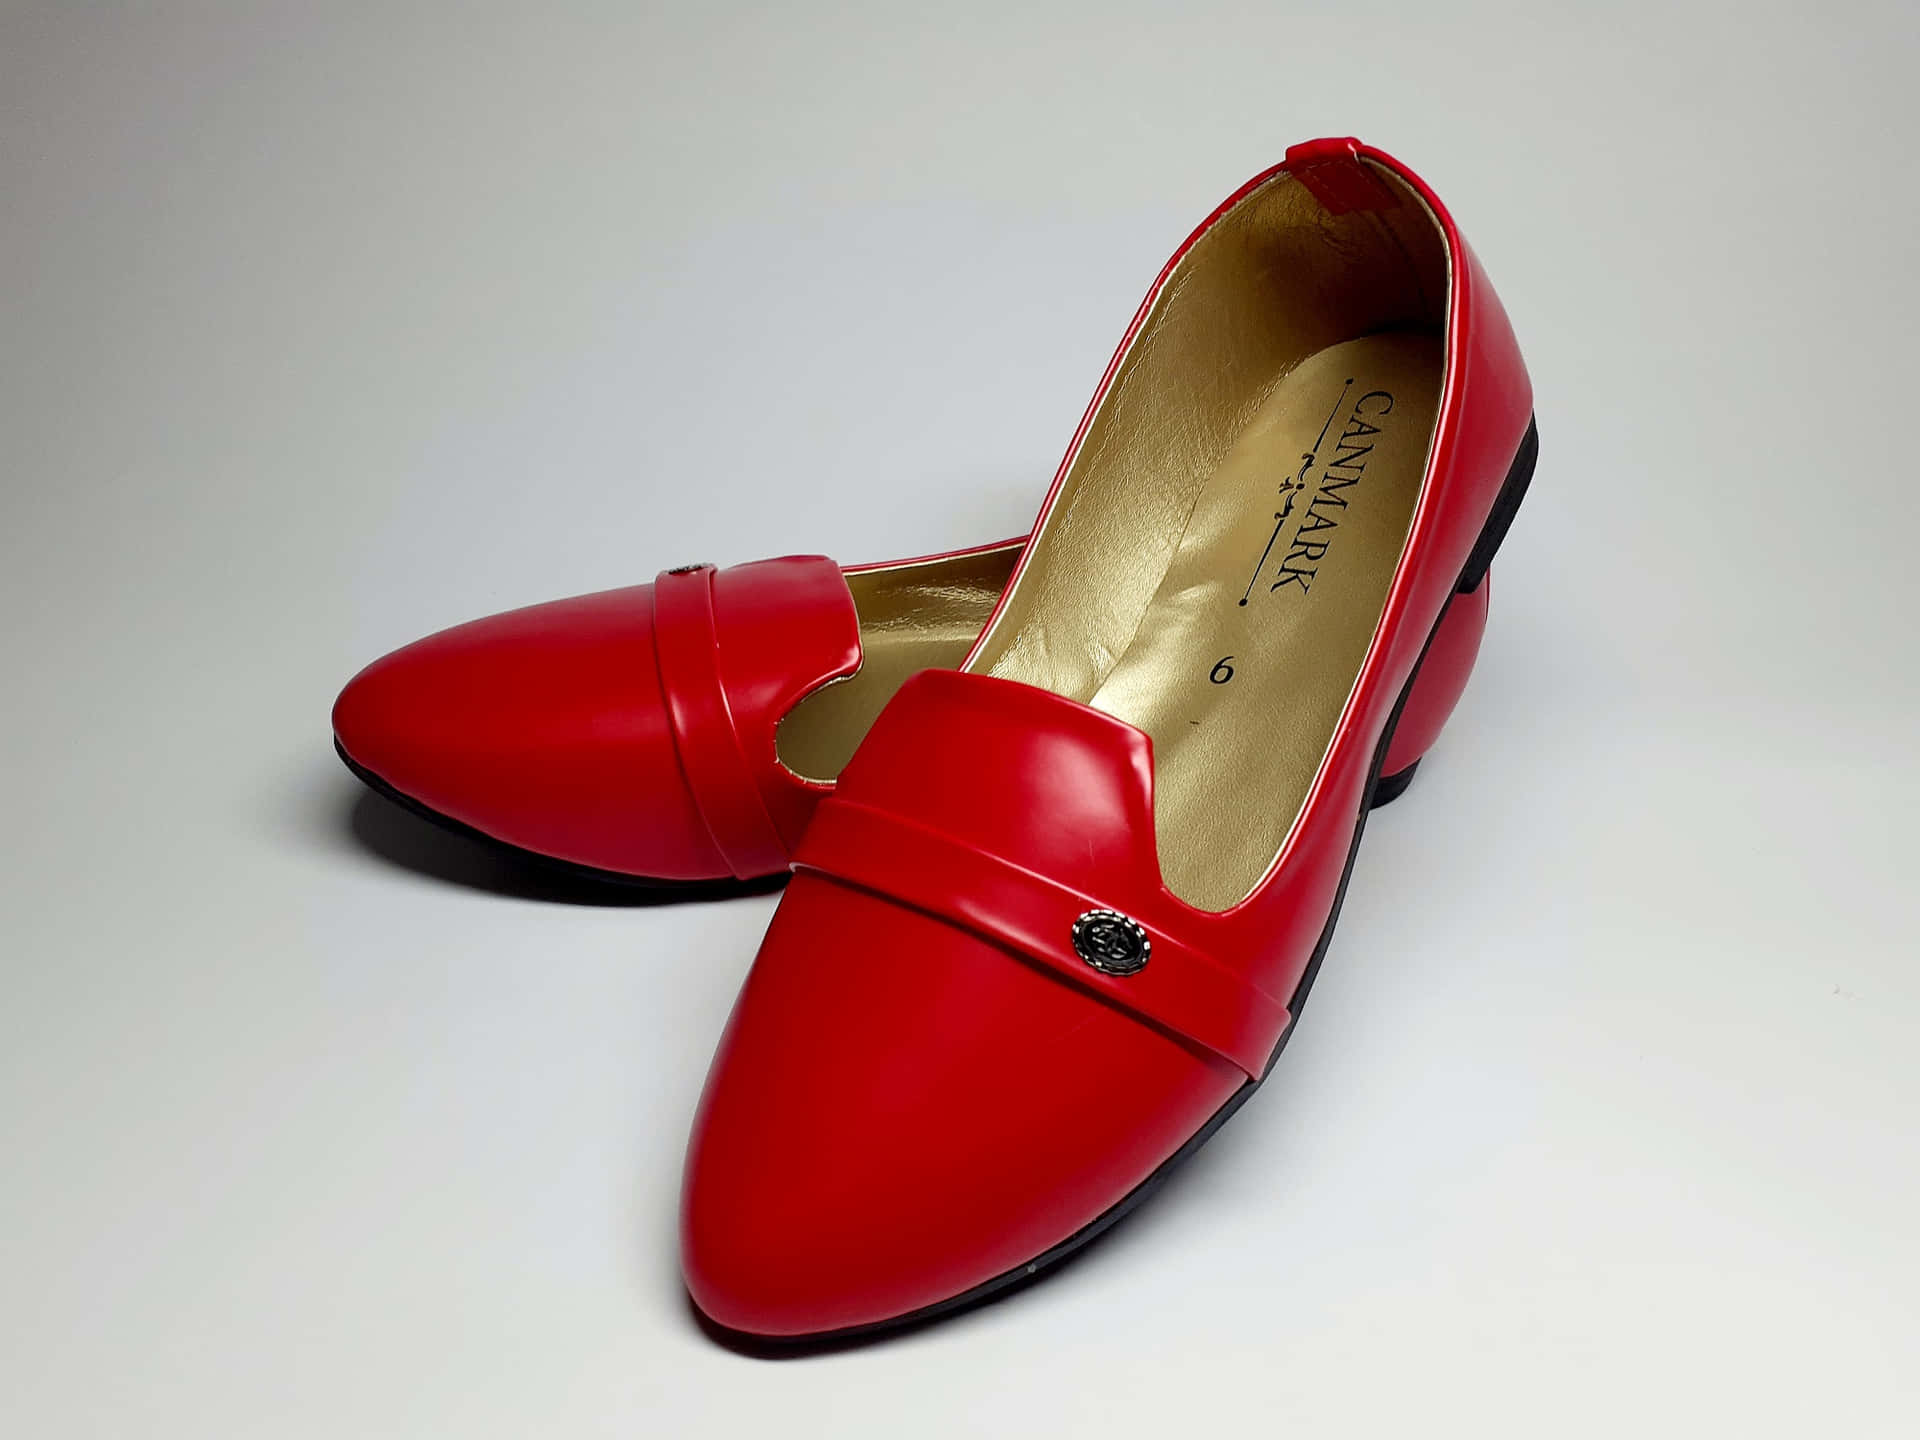 Elegant Red Shoes Wallpaper